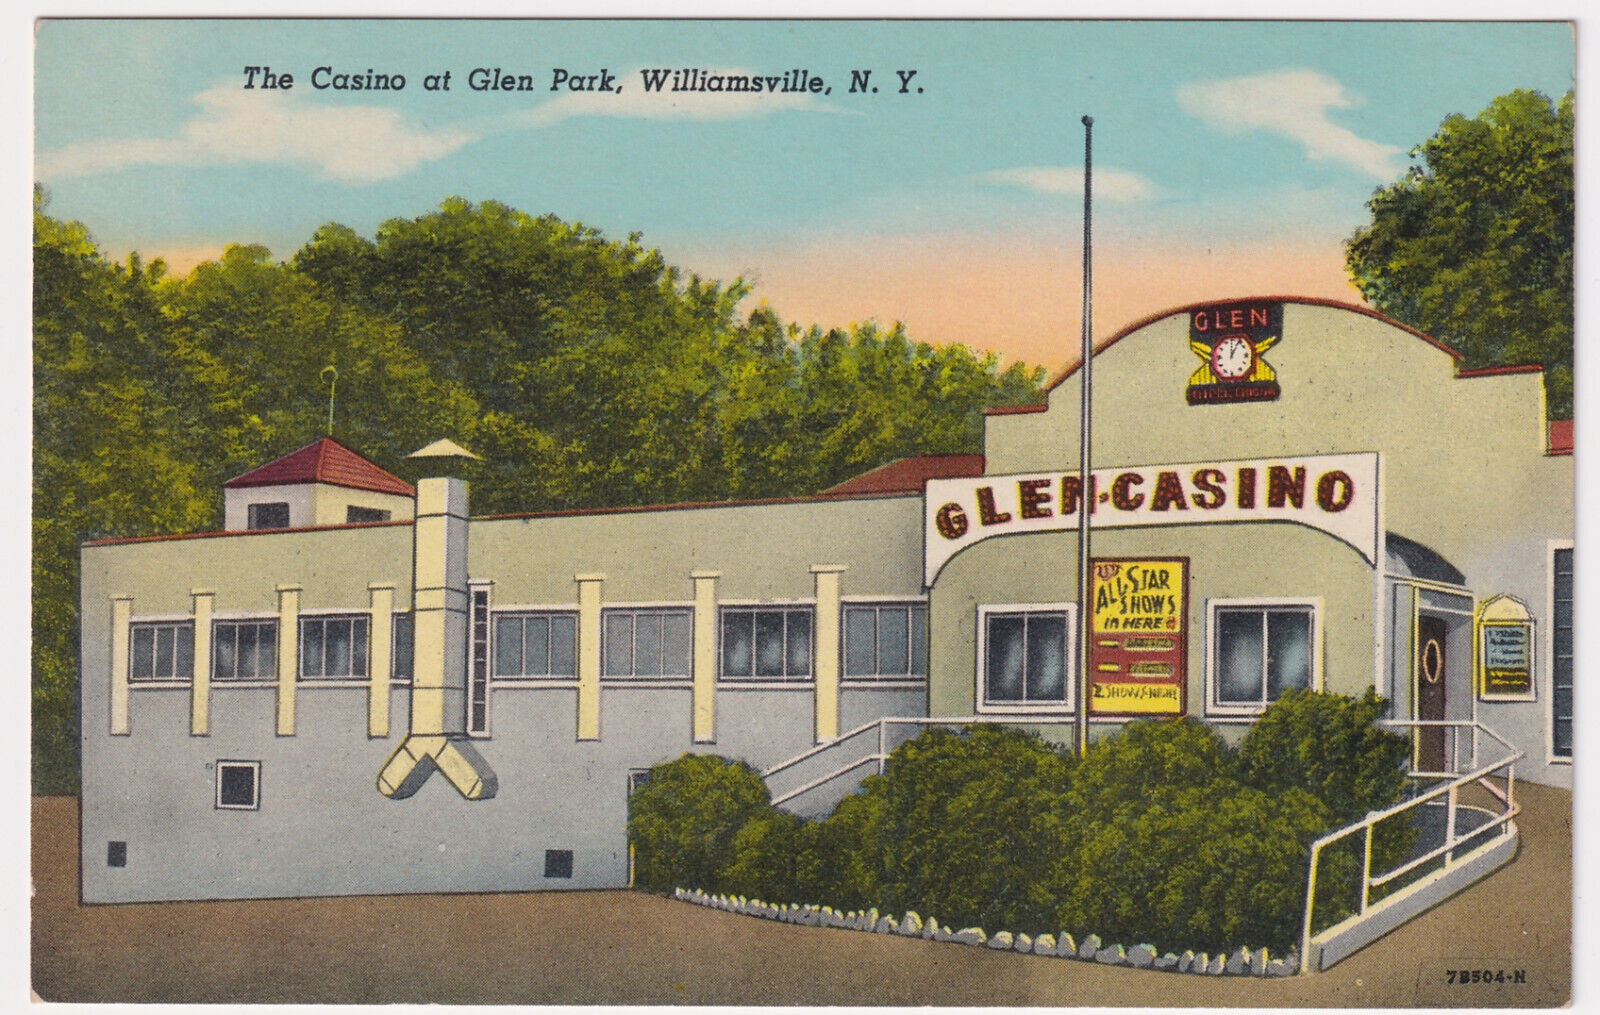 NEW YORK WILLIAMSVILLE THE CASINO AT GLEN PARK, PUBLISHED BY CURTEICH CIRCA 1940